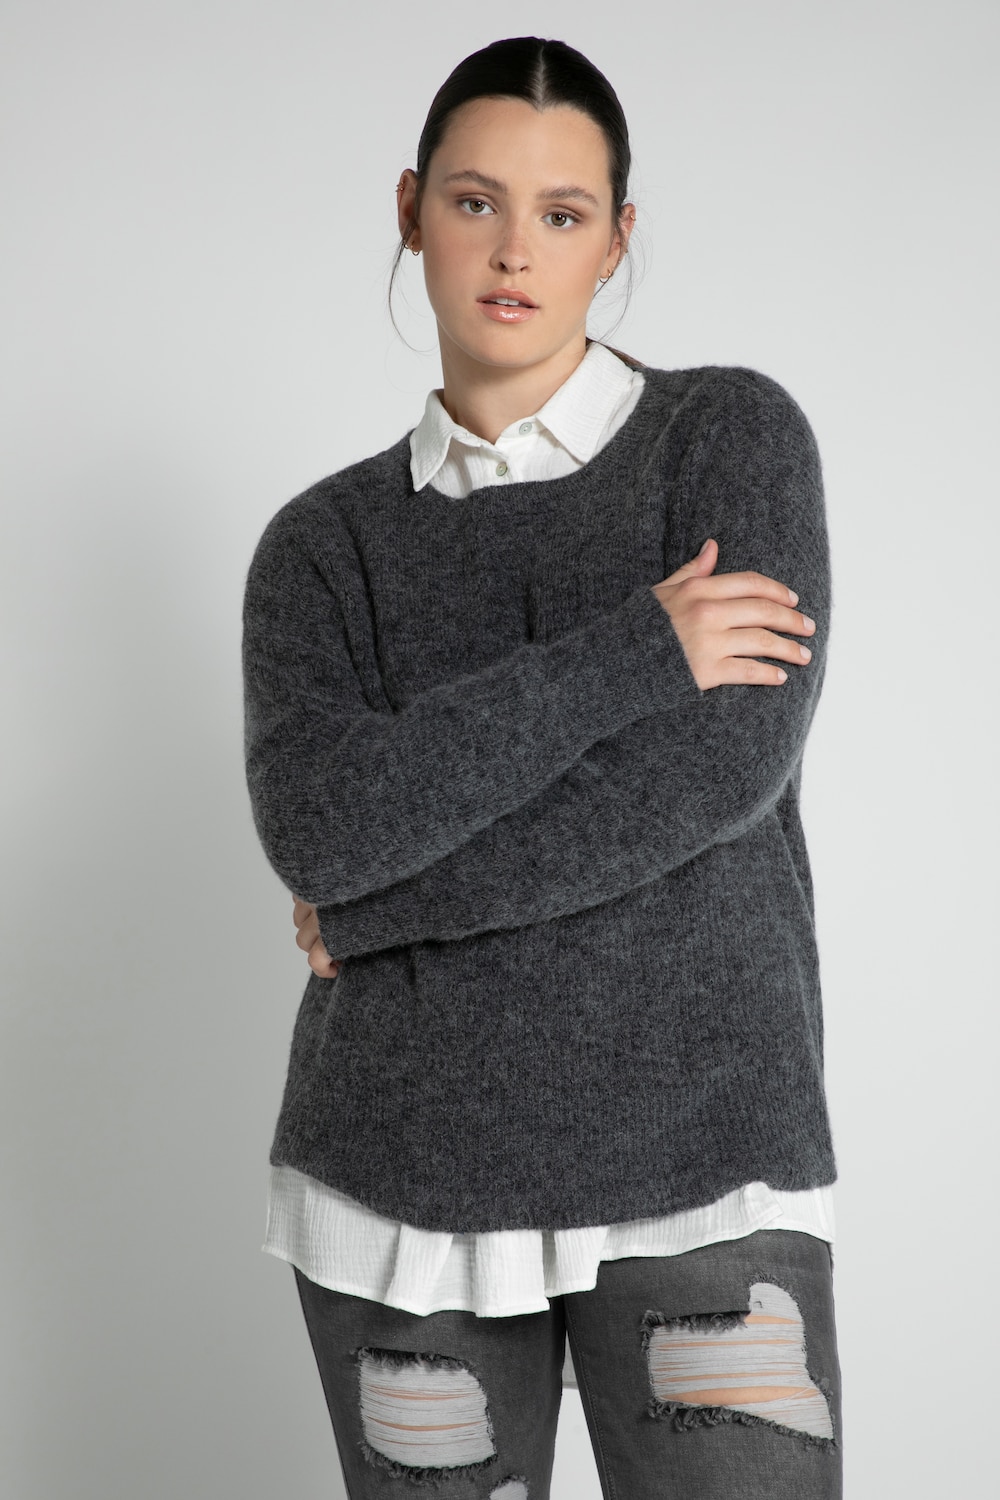 Plus Size Soft Rib Knit Sweater, Woman, black, size: 16/18, synthetic fibers/wool, Studio Untold